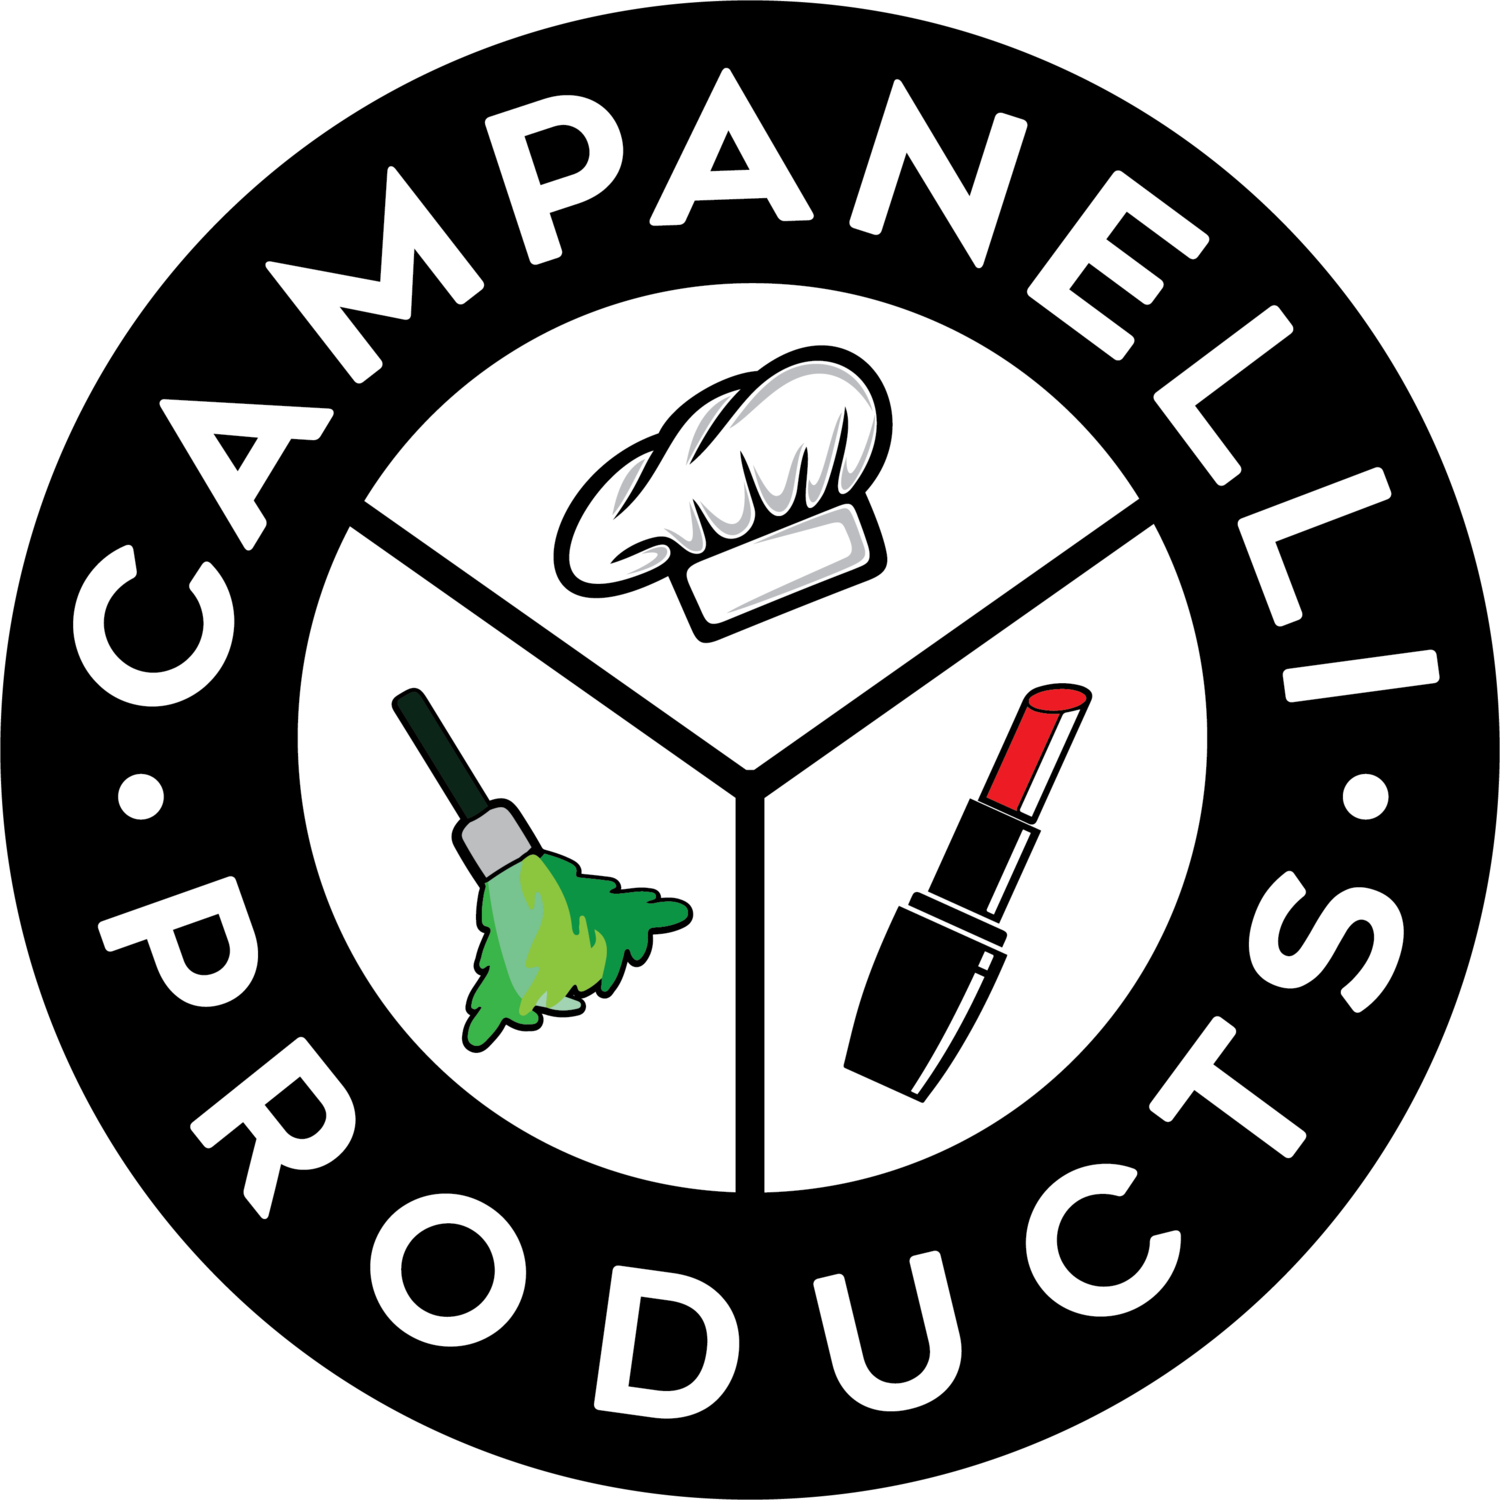 campanelli products